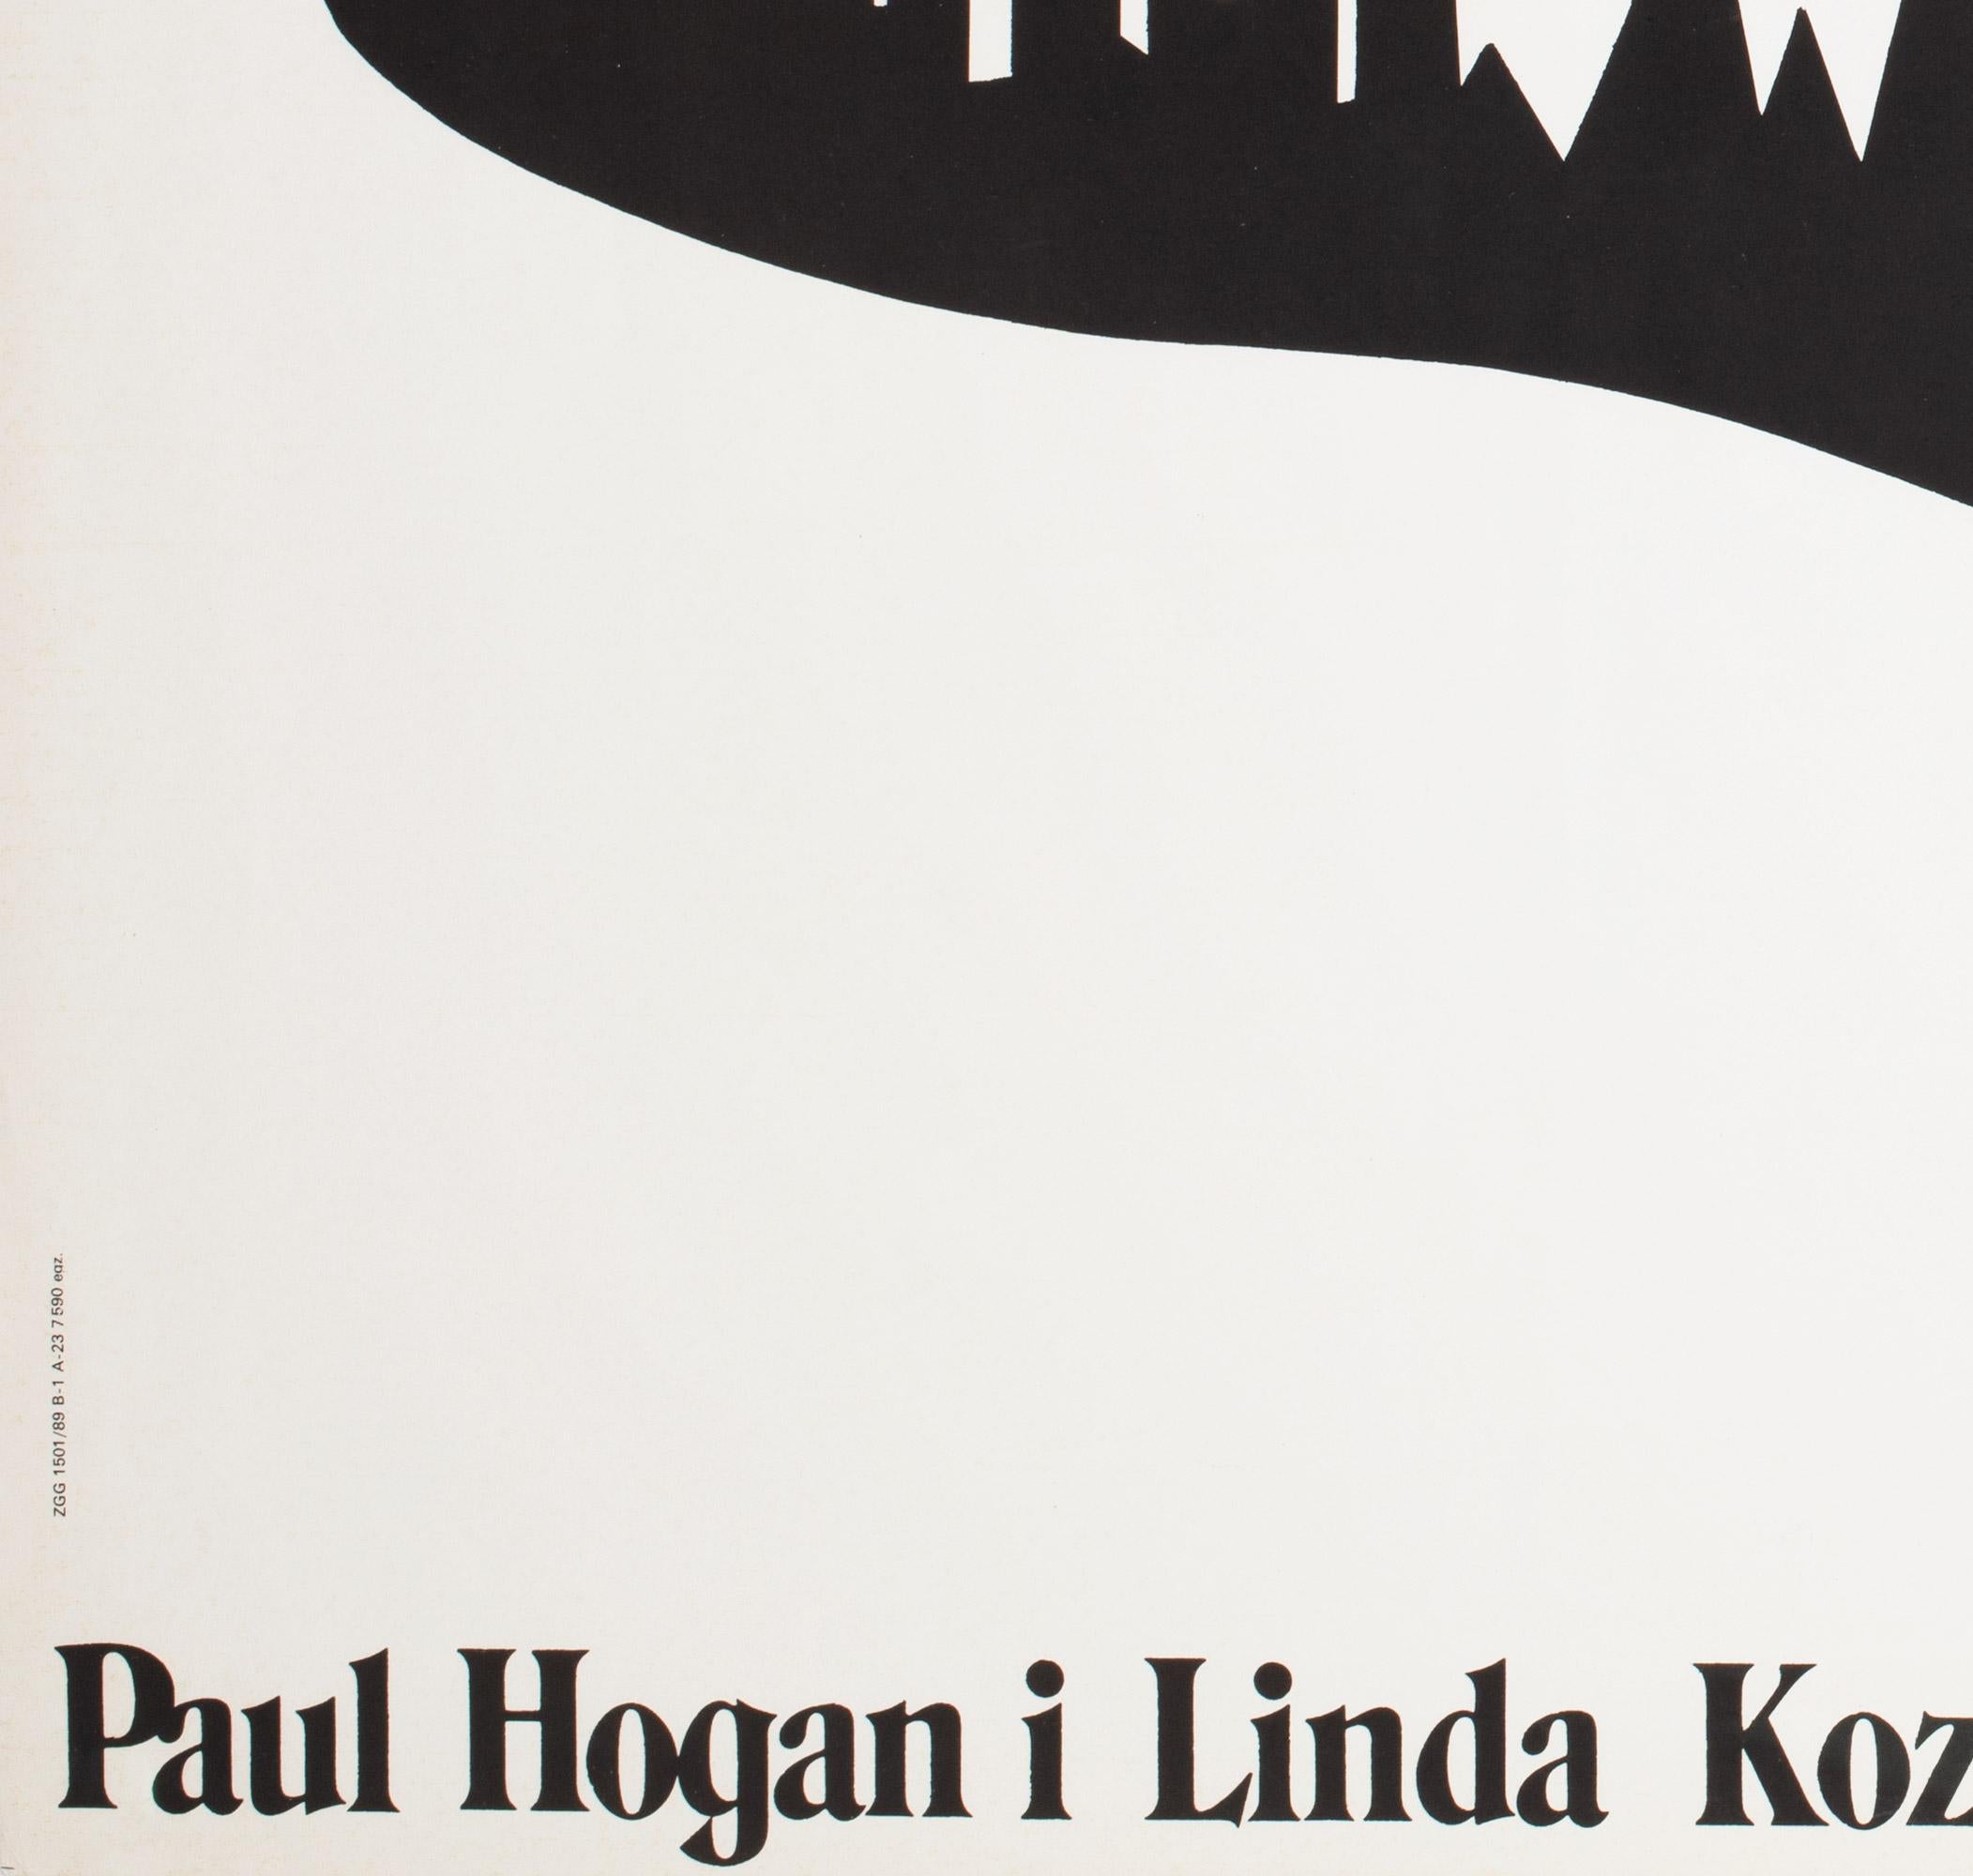 Crocodile Dundee 2 1989 Vintage Polish B1 Film Poster, Wasilewski, Black, White 1